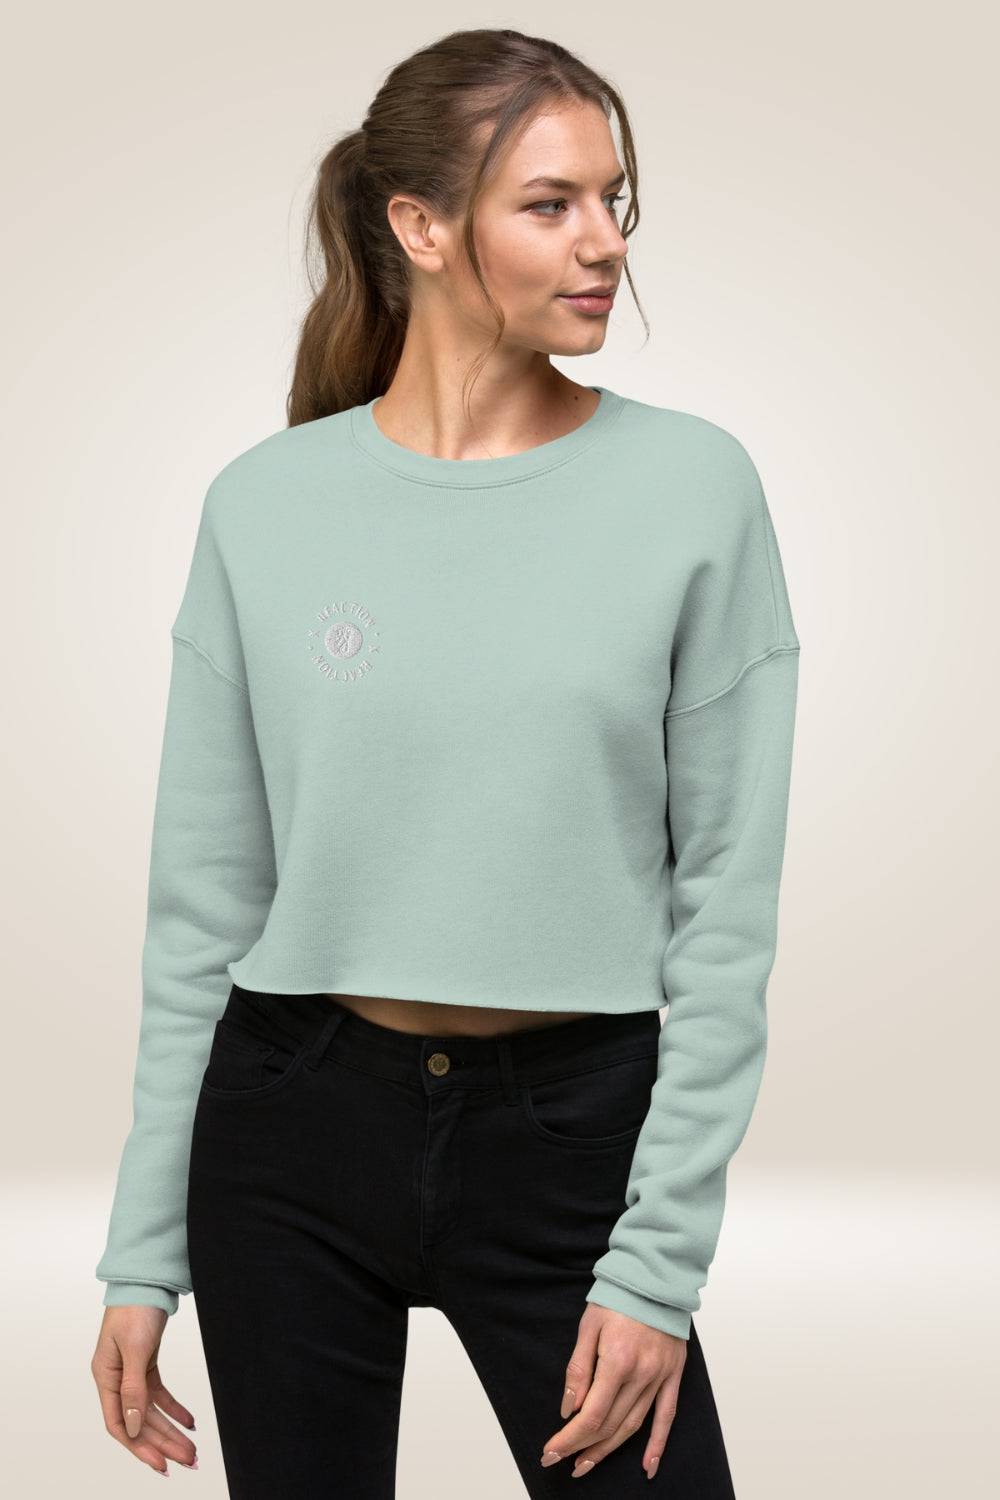 TGC X Reaction Light Blue Cropped Sweatshirt - TGC Boutique - Cropped Sweatshirt